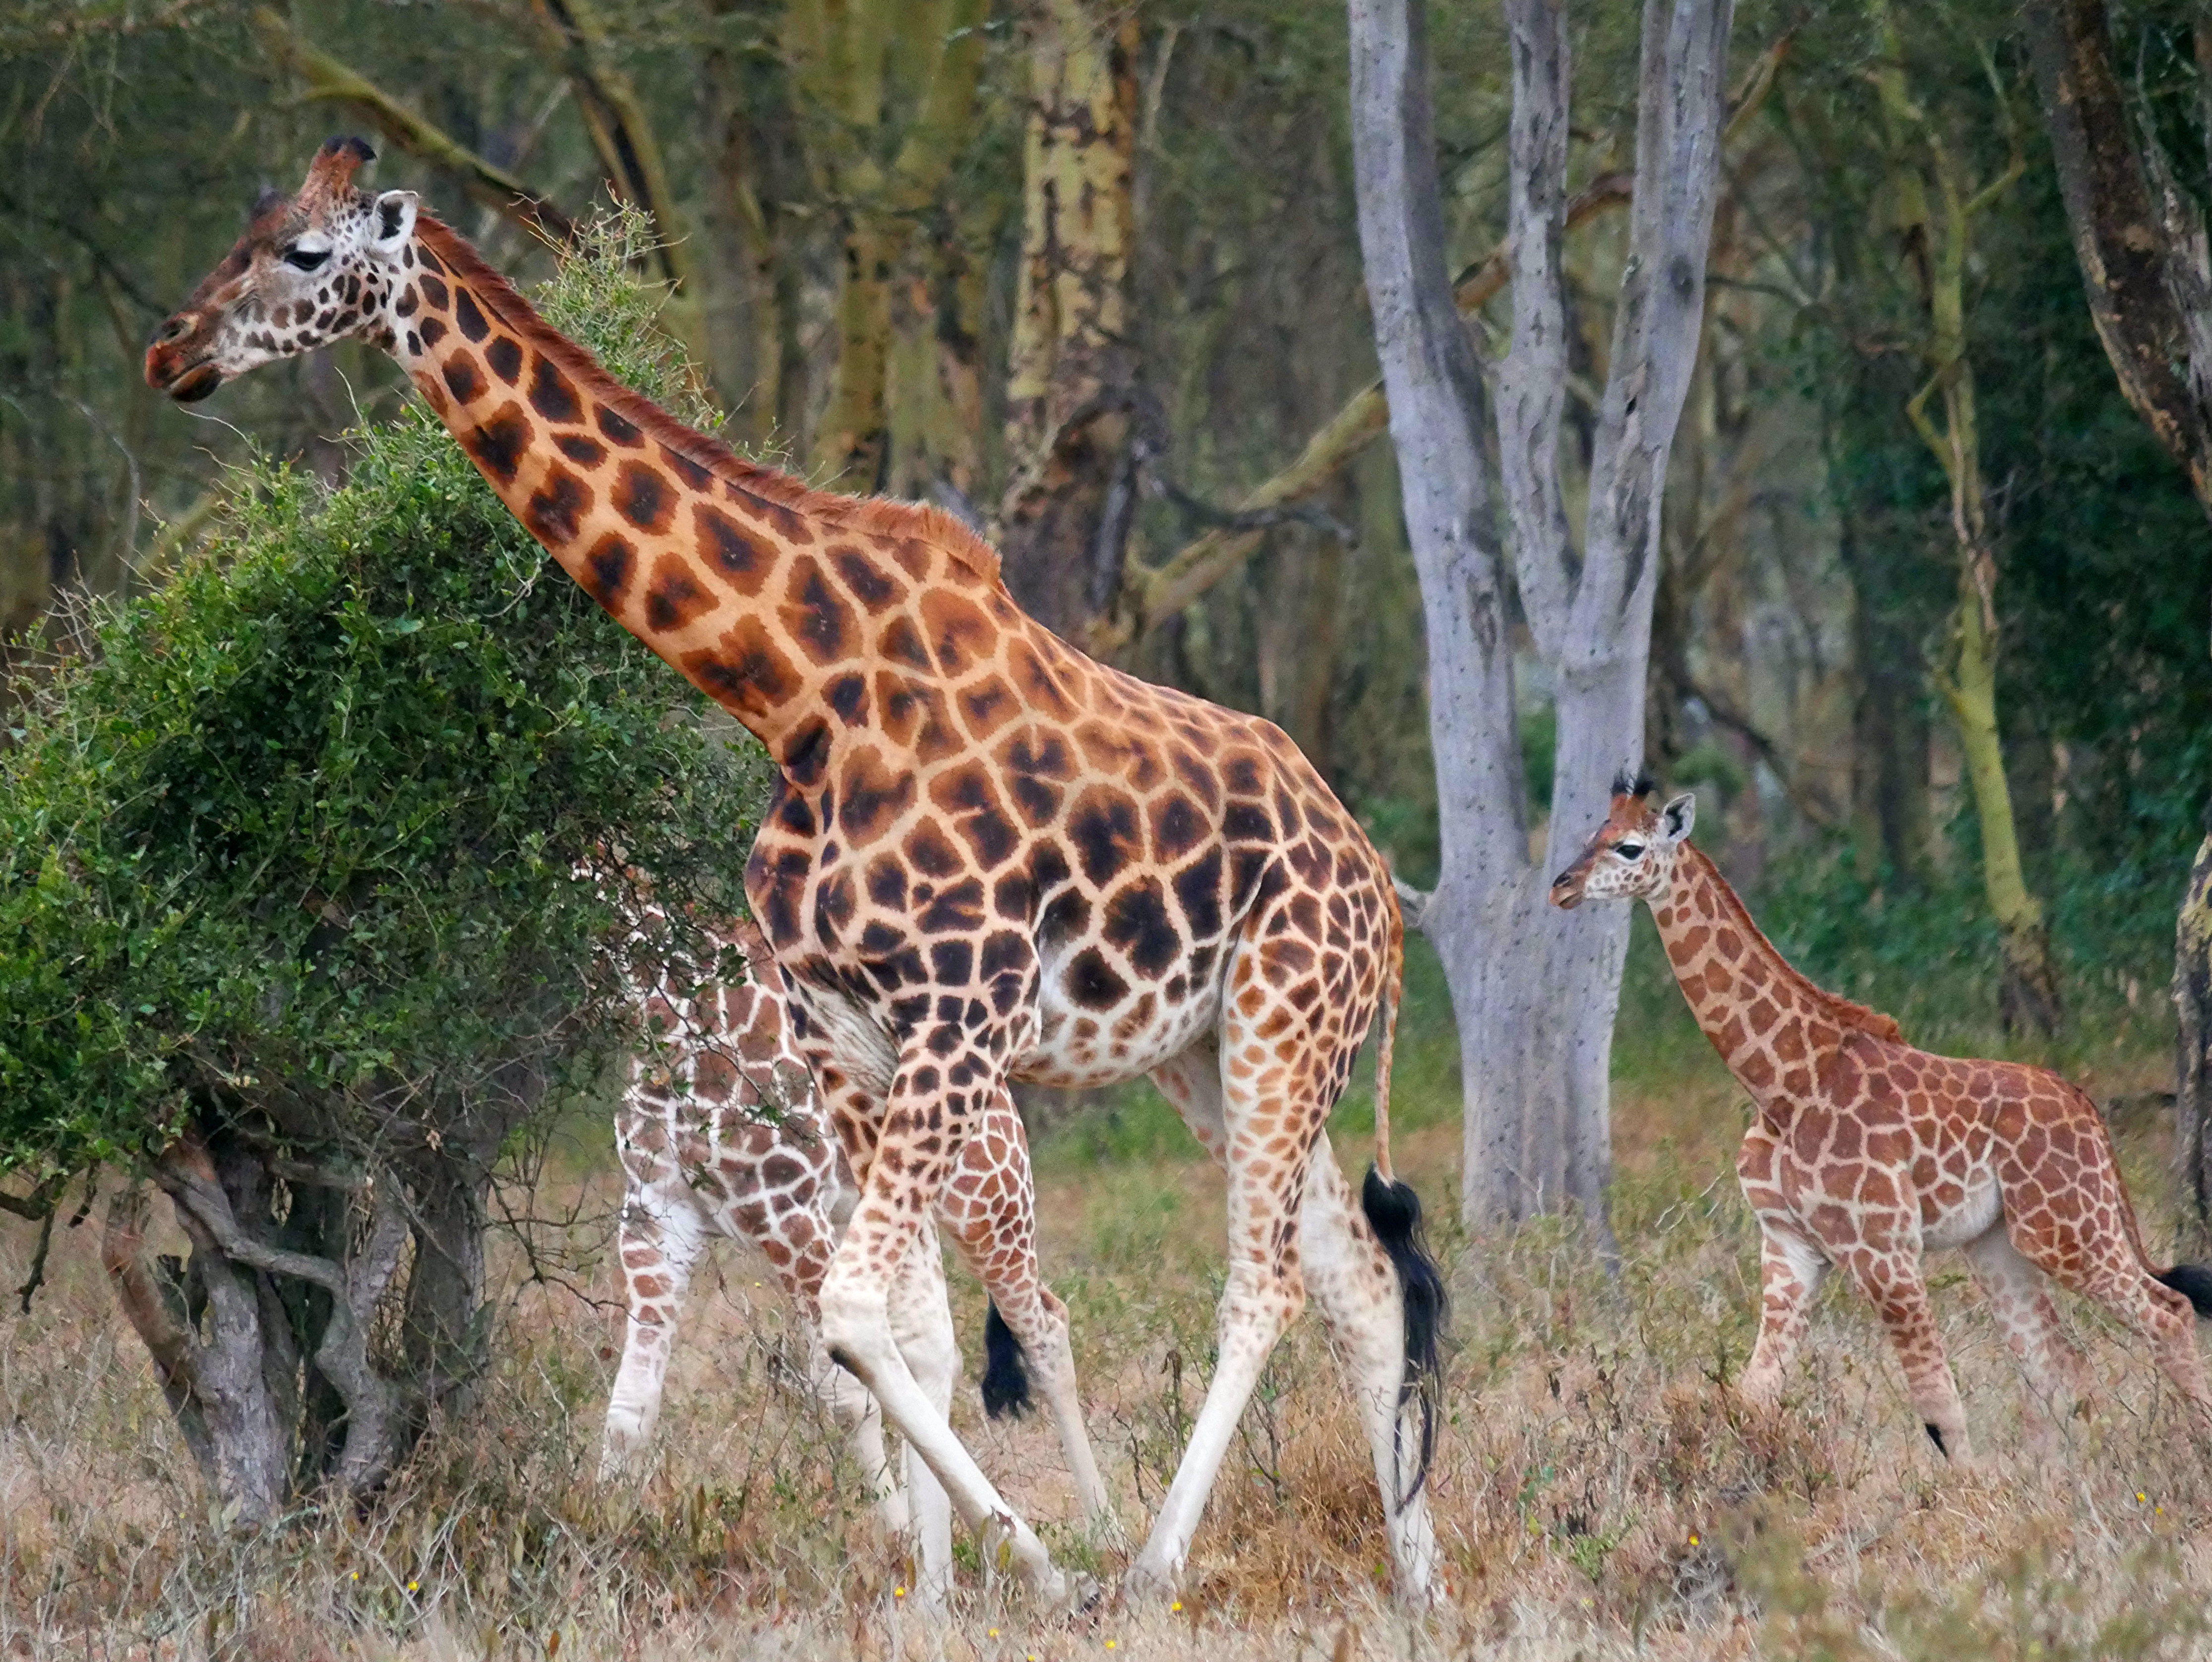 #1 Aberdare National Park, Kenya